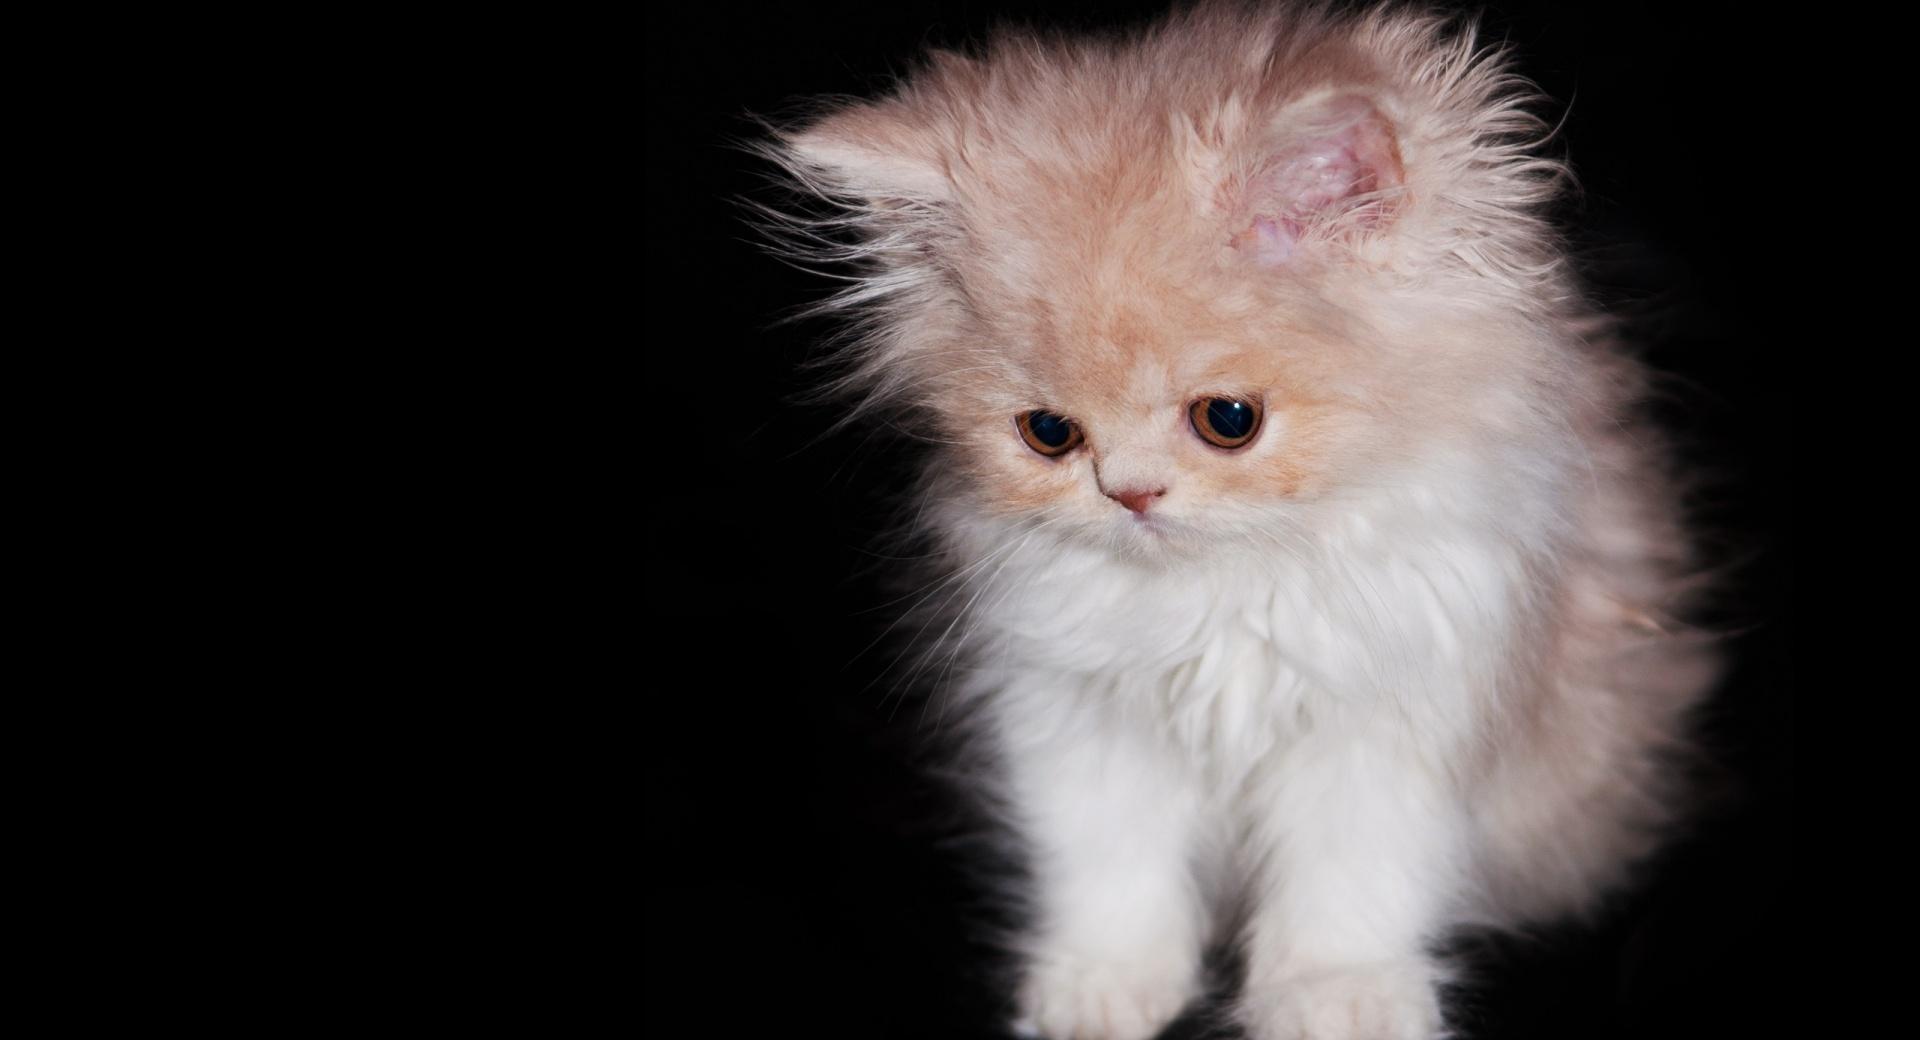 Cute Persian Kitten at 1024 x 1024 iPad size wallpapers HD quality